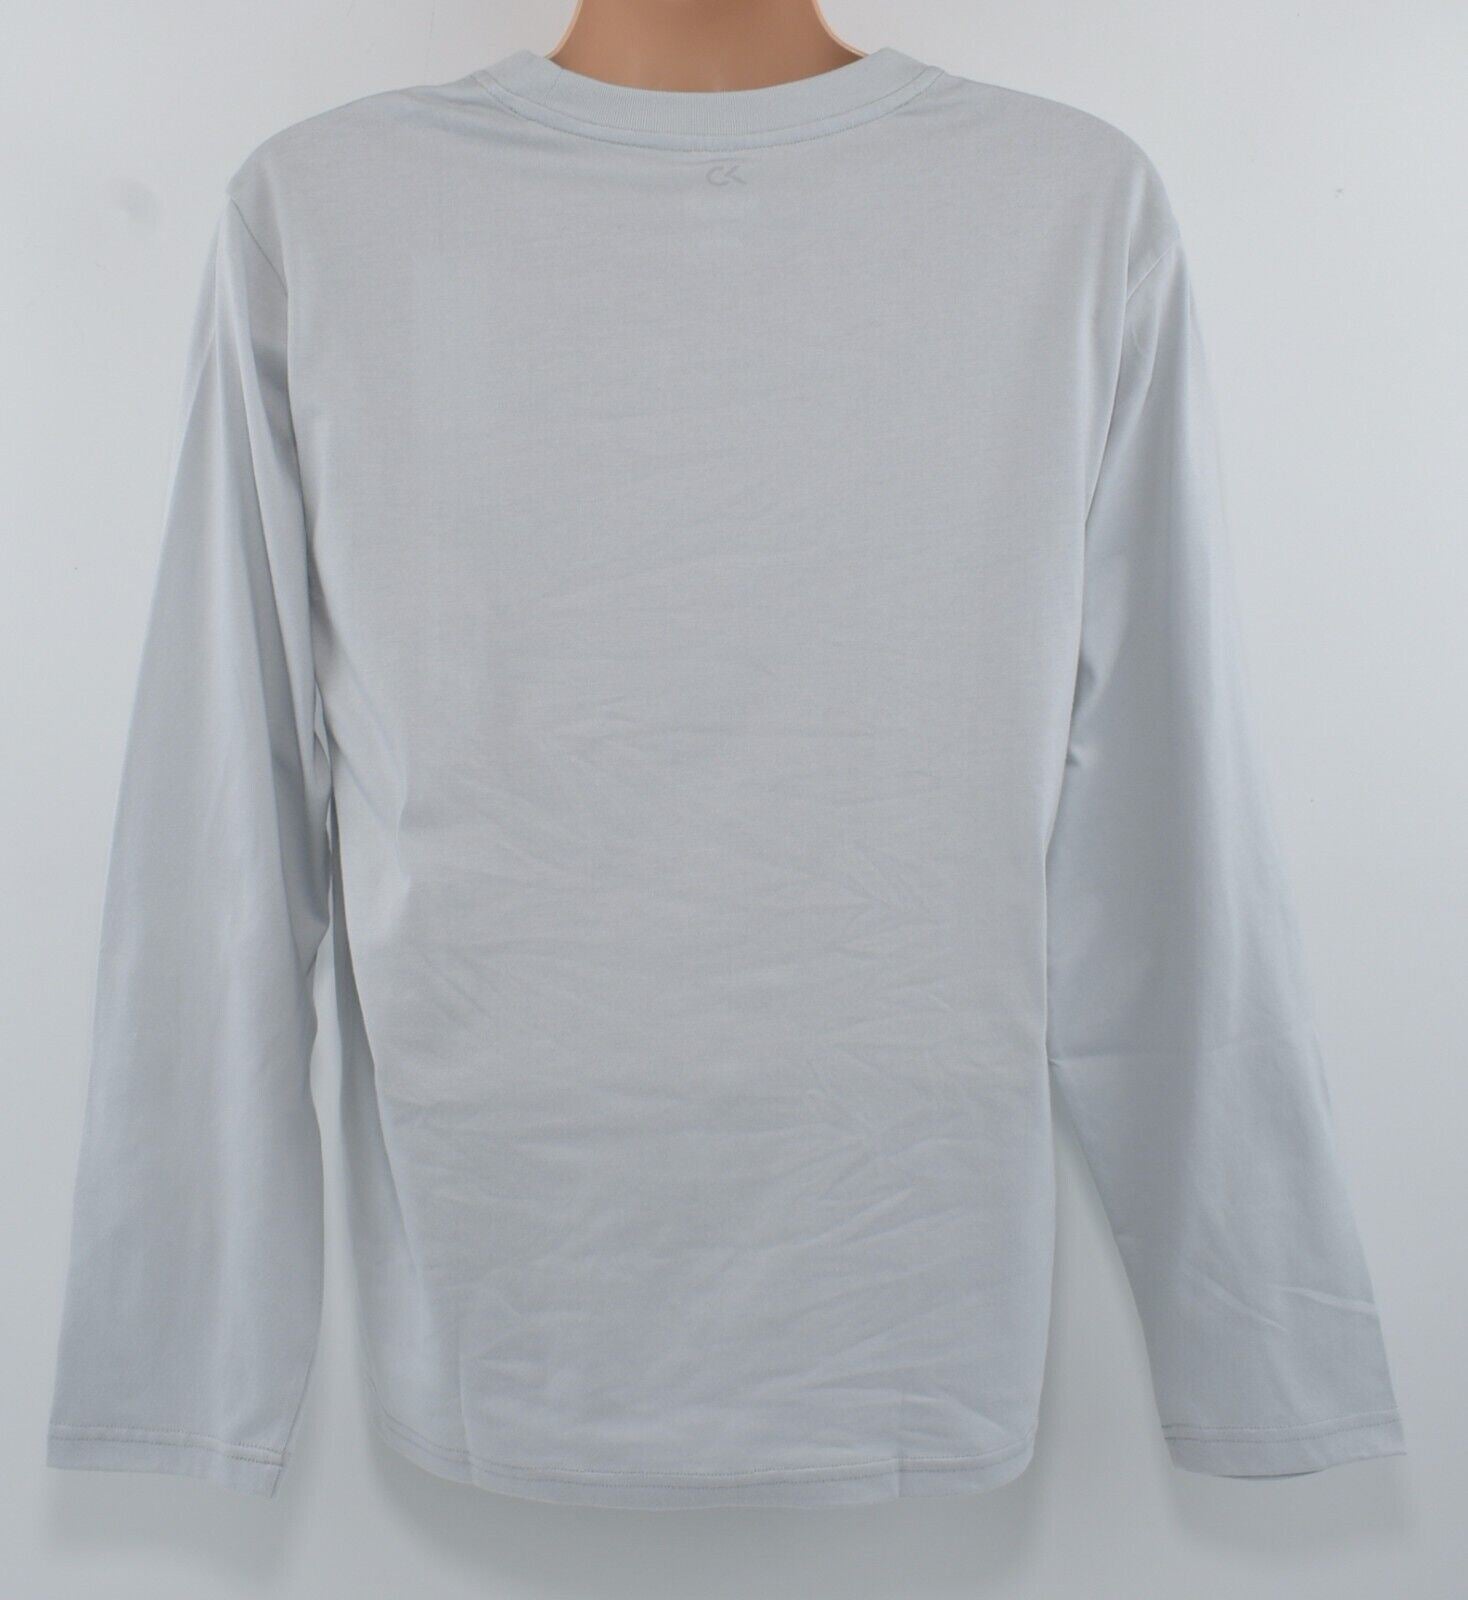 CALVIN KLEIN Performance: Men's Long Sleeve Crew Neck T-shirt Top, Grey, size L